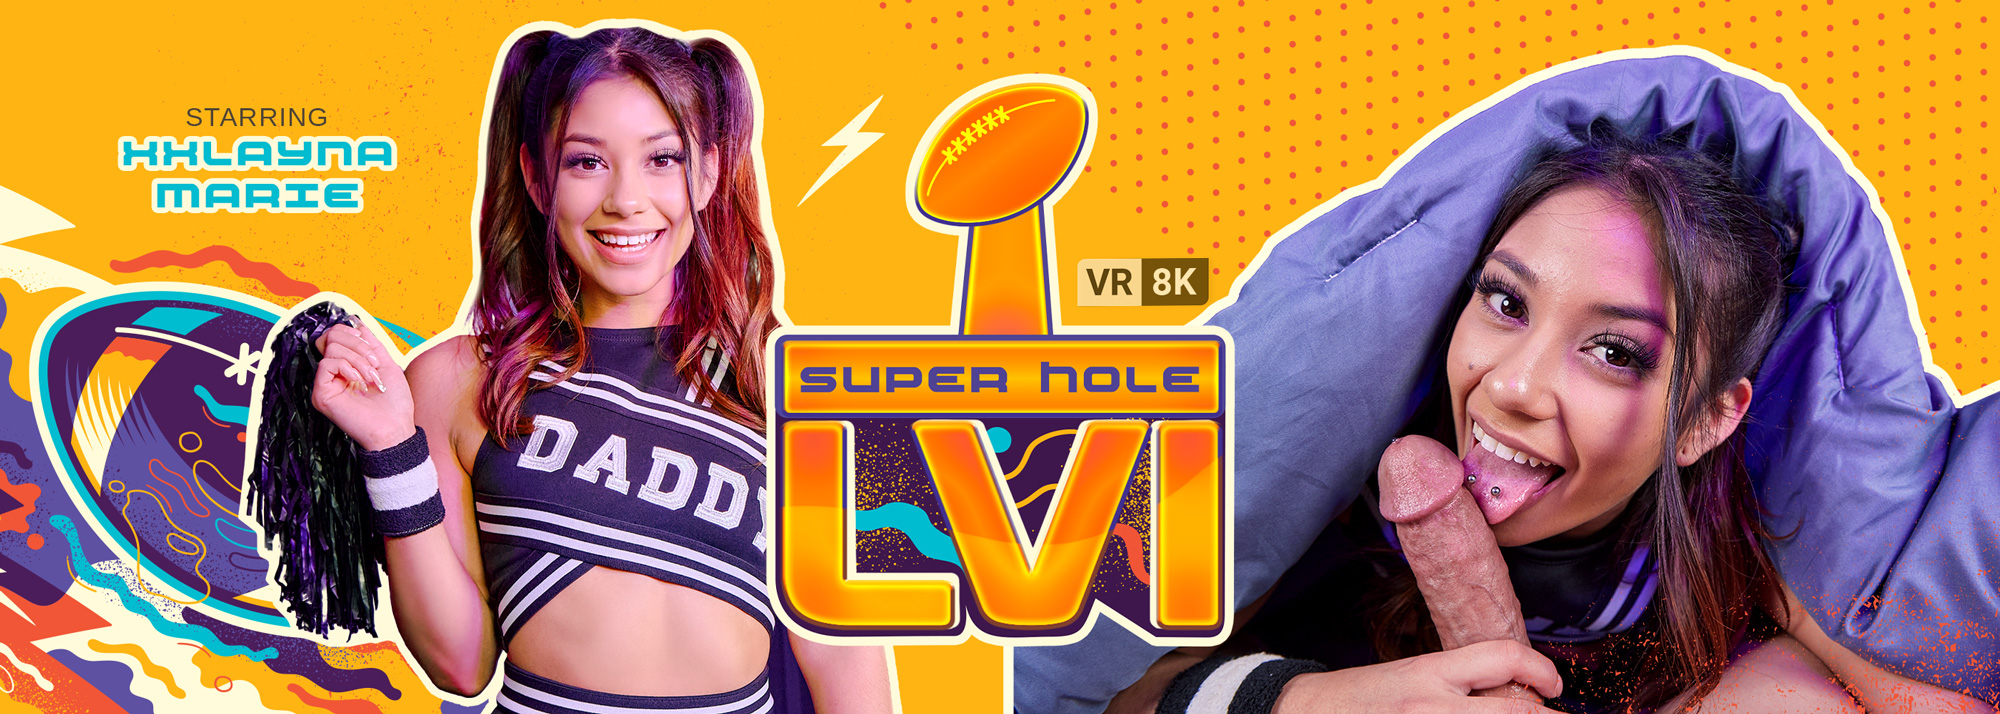 Super Hole LVI - VR Porn Video, Starring: Xxlayna Marie